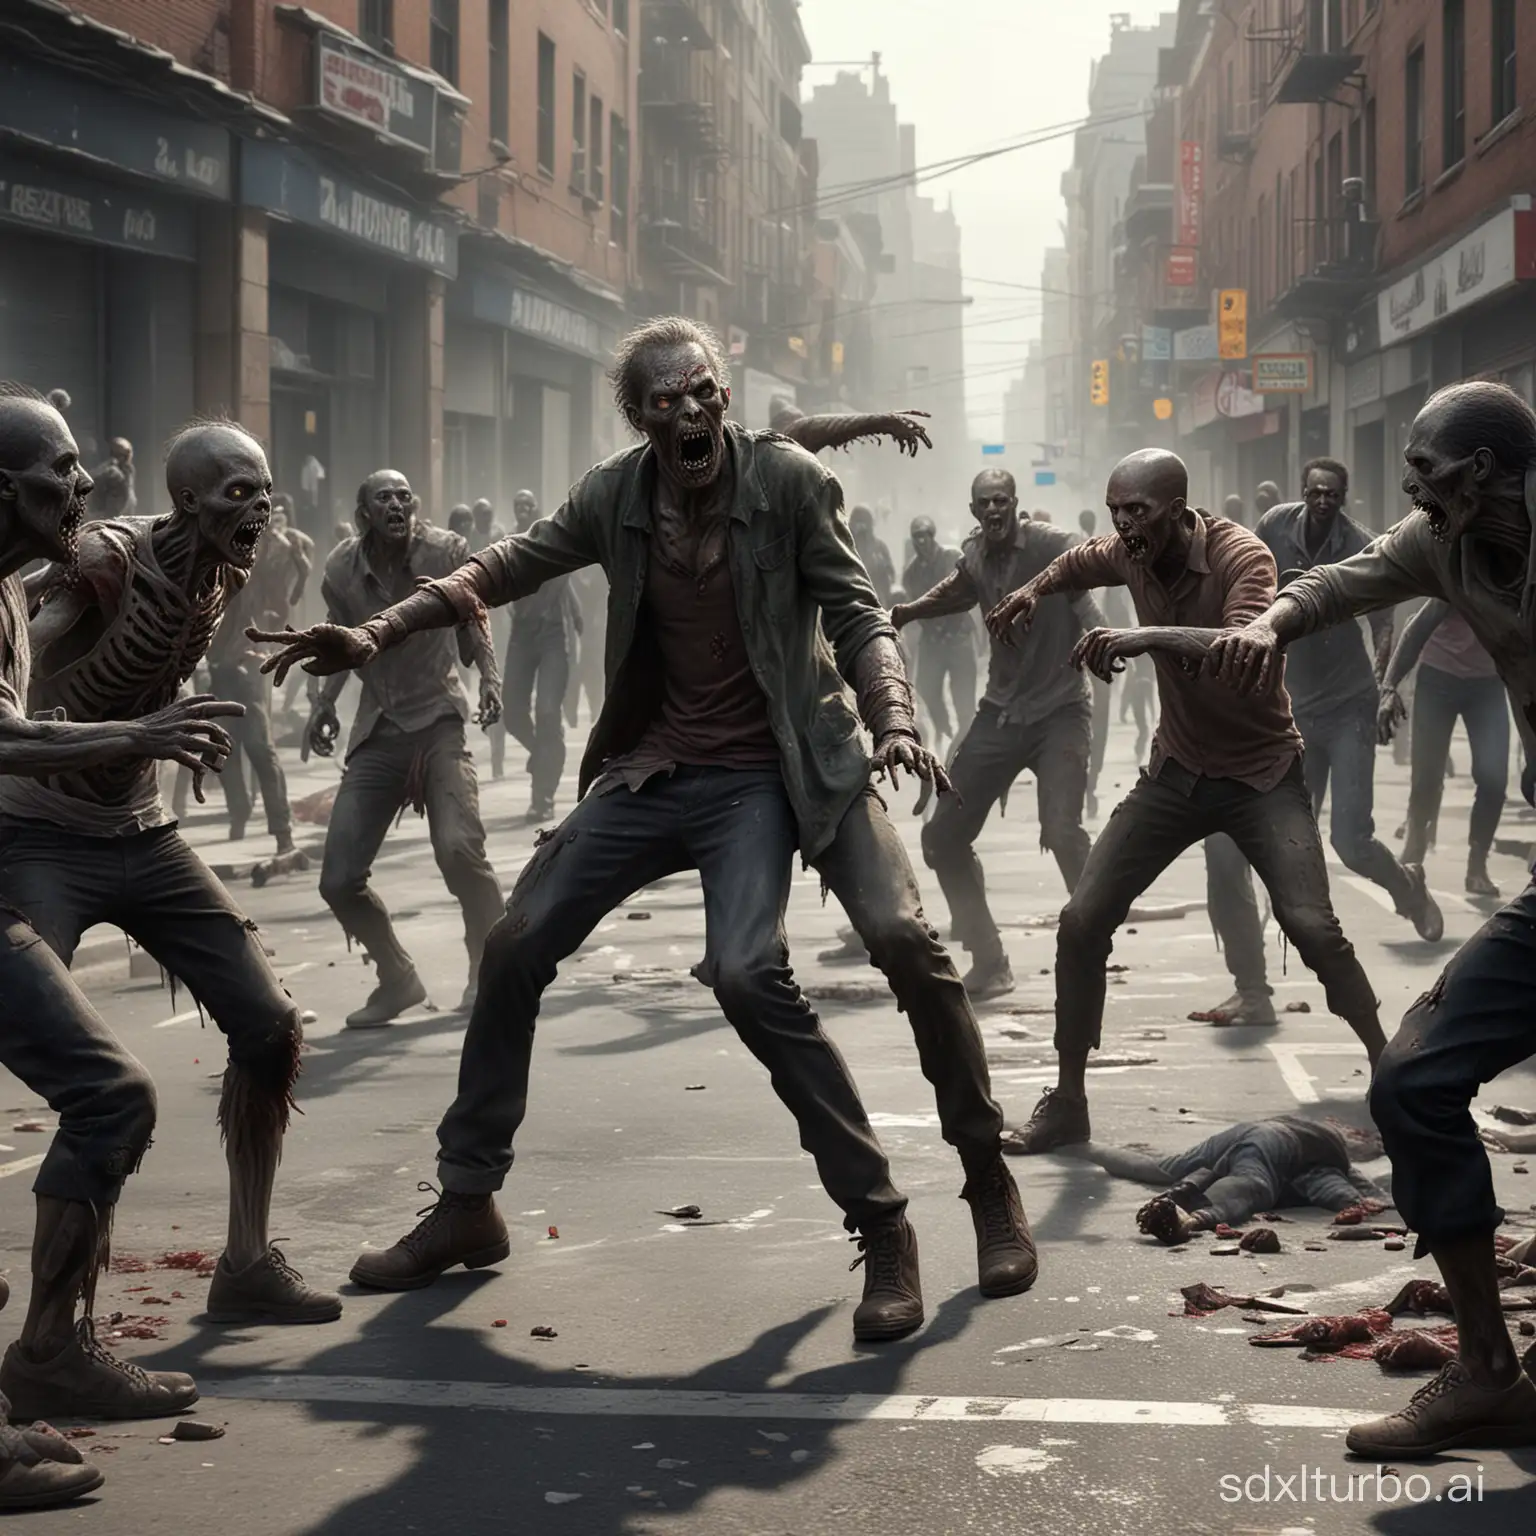 Intense-Urban-Battle-Zombies-vs-Humans-Clash-in-Realistic-Street-Scene